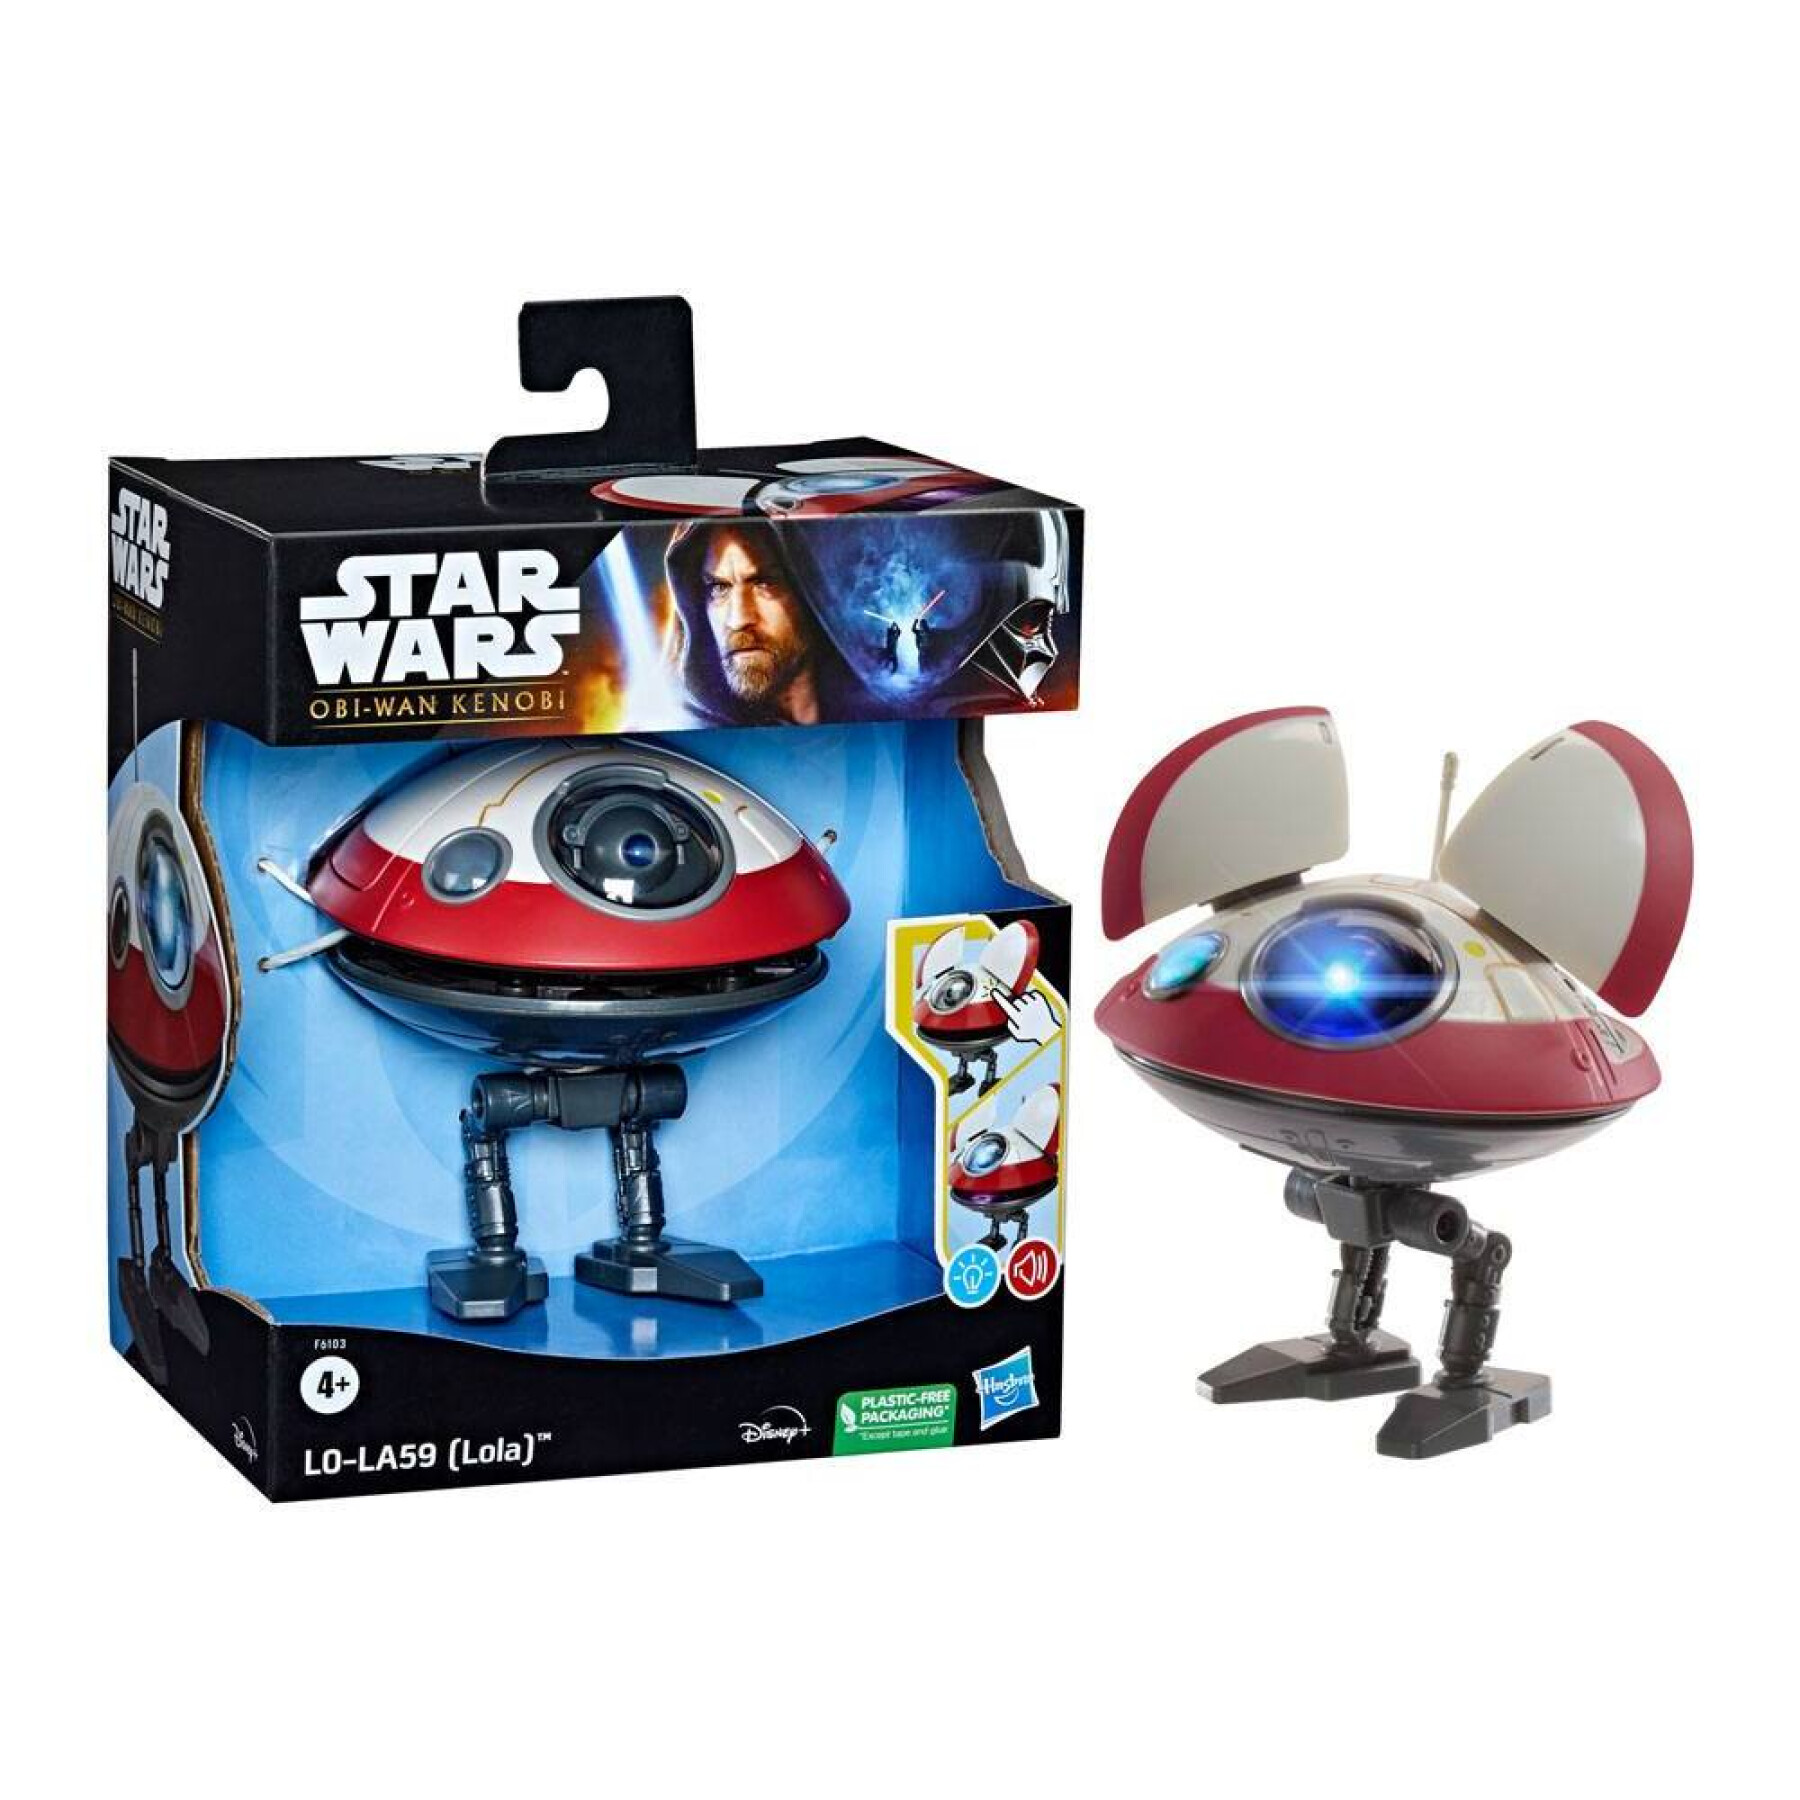 Figurina elettronica lo-la59 lola Hasbro Star Wars: Obi-Wan Kenobi